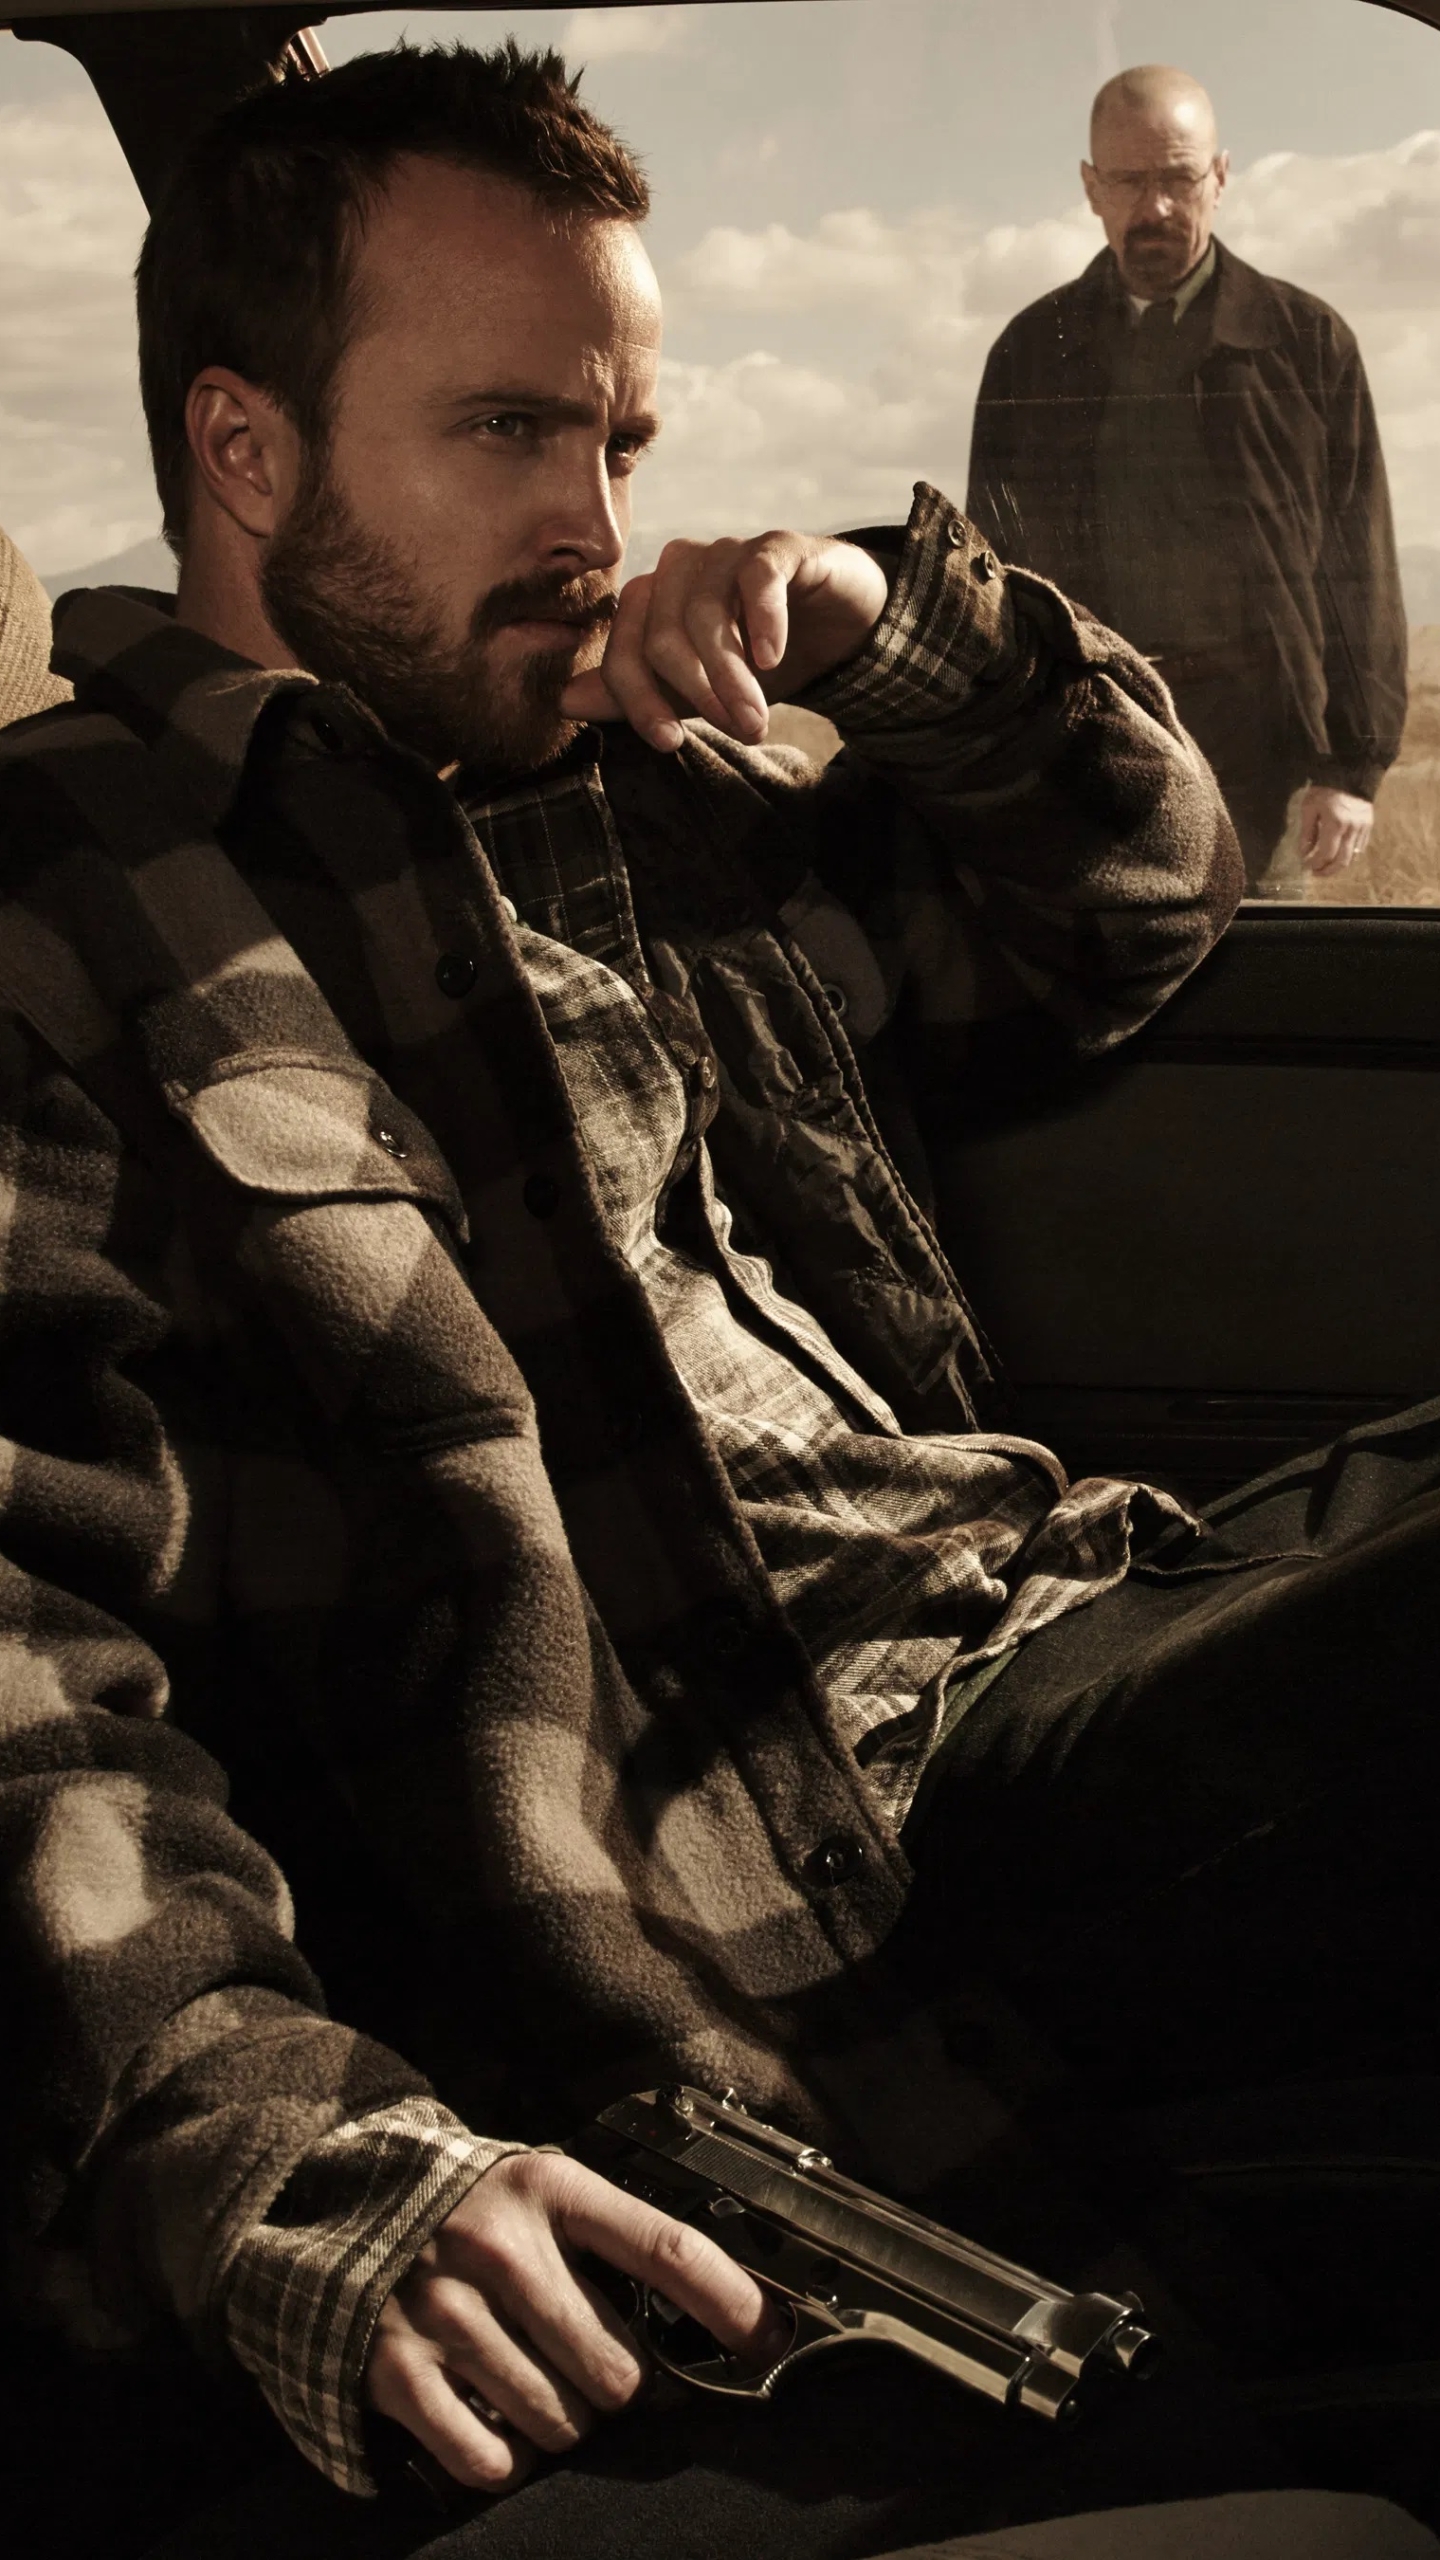 Aaron Paul as Jesse Pinkman